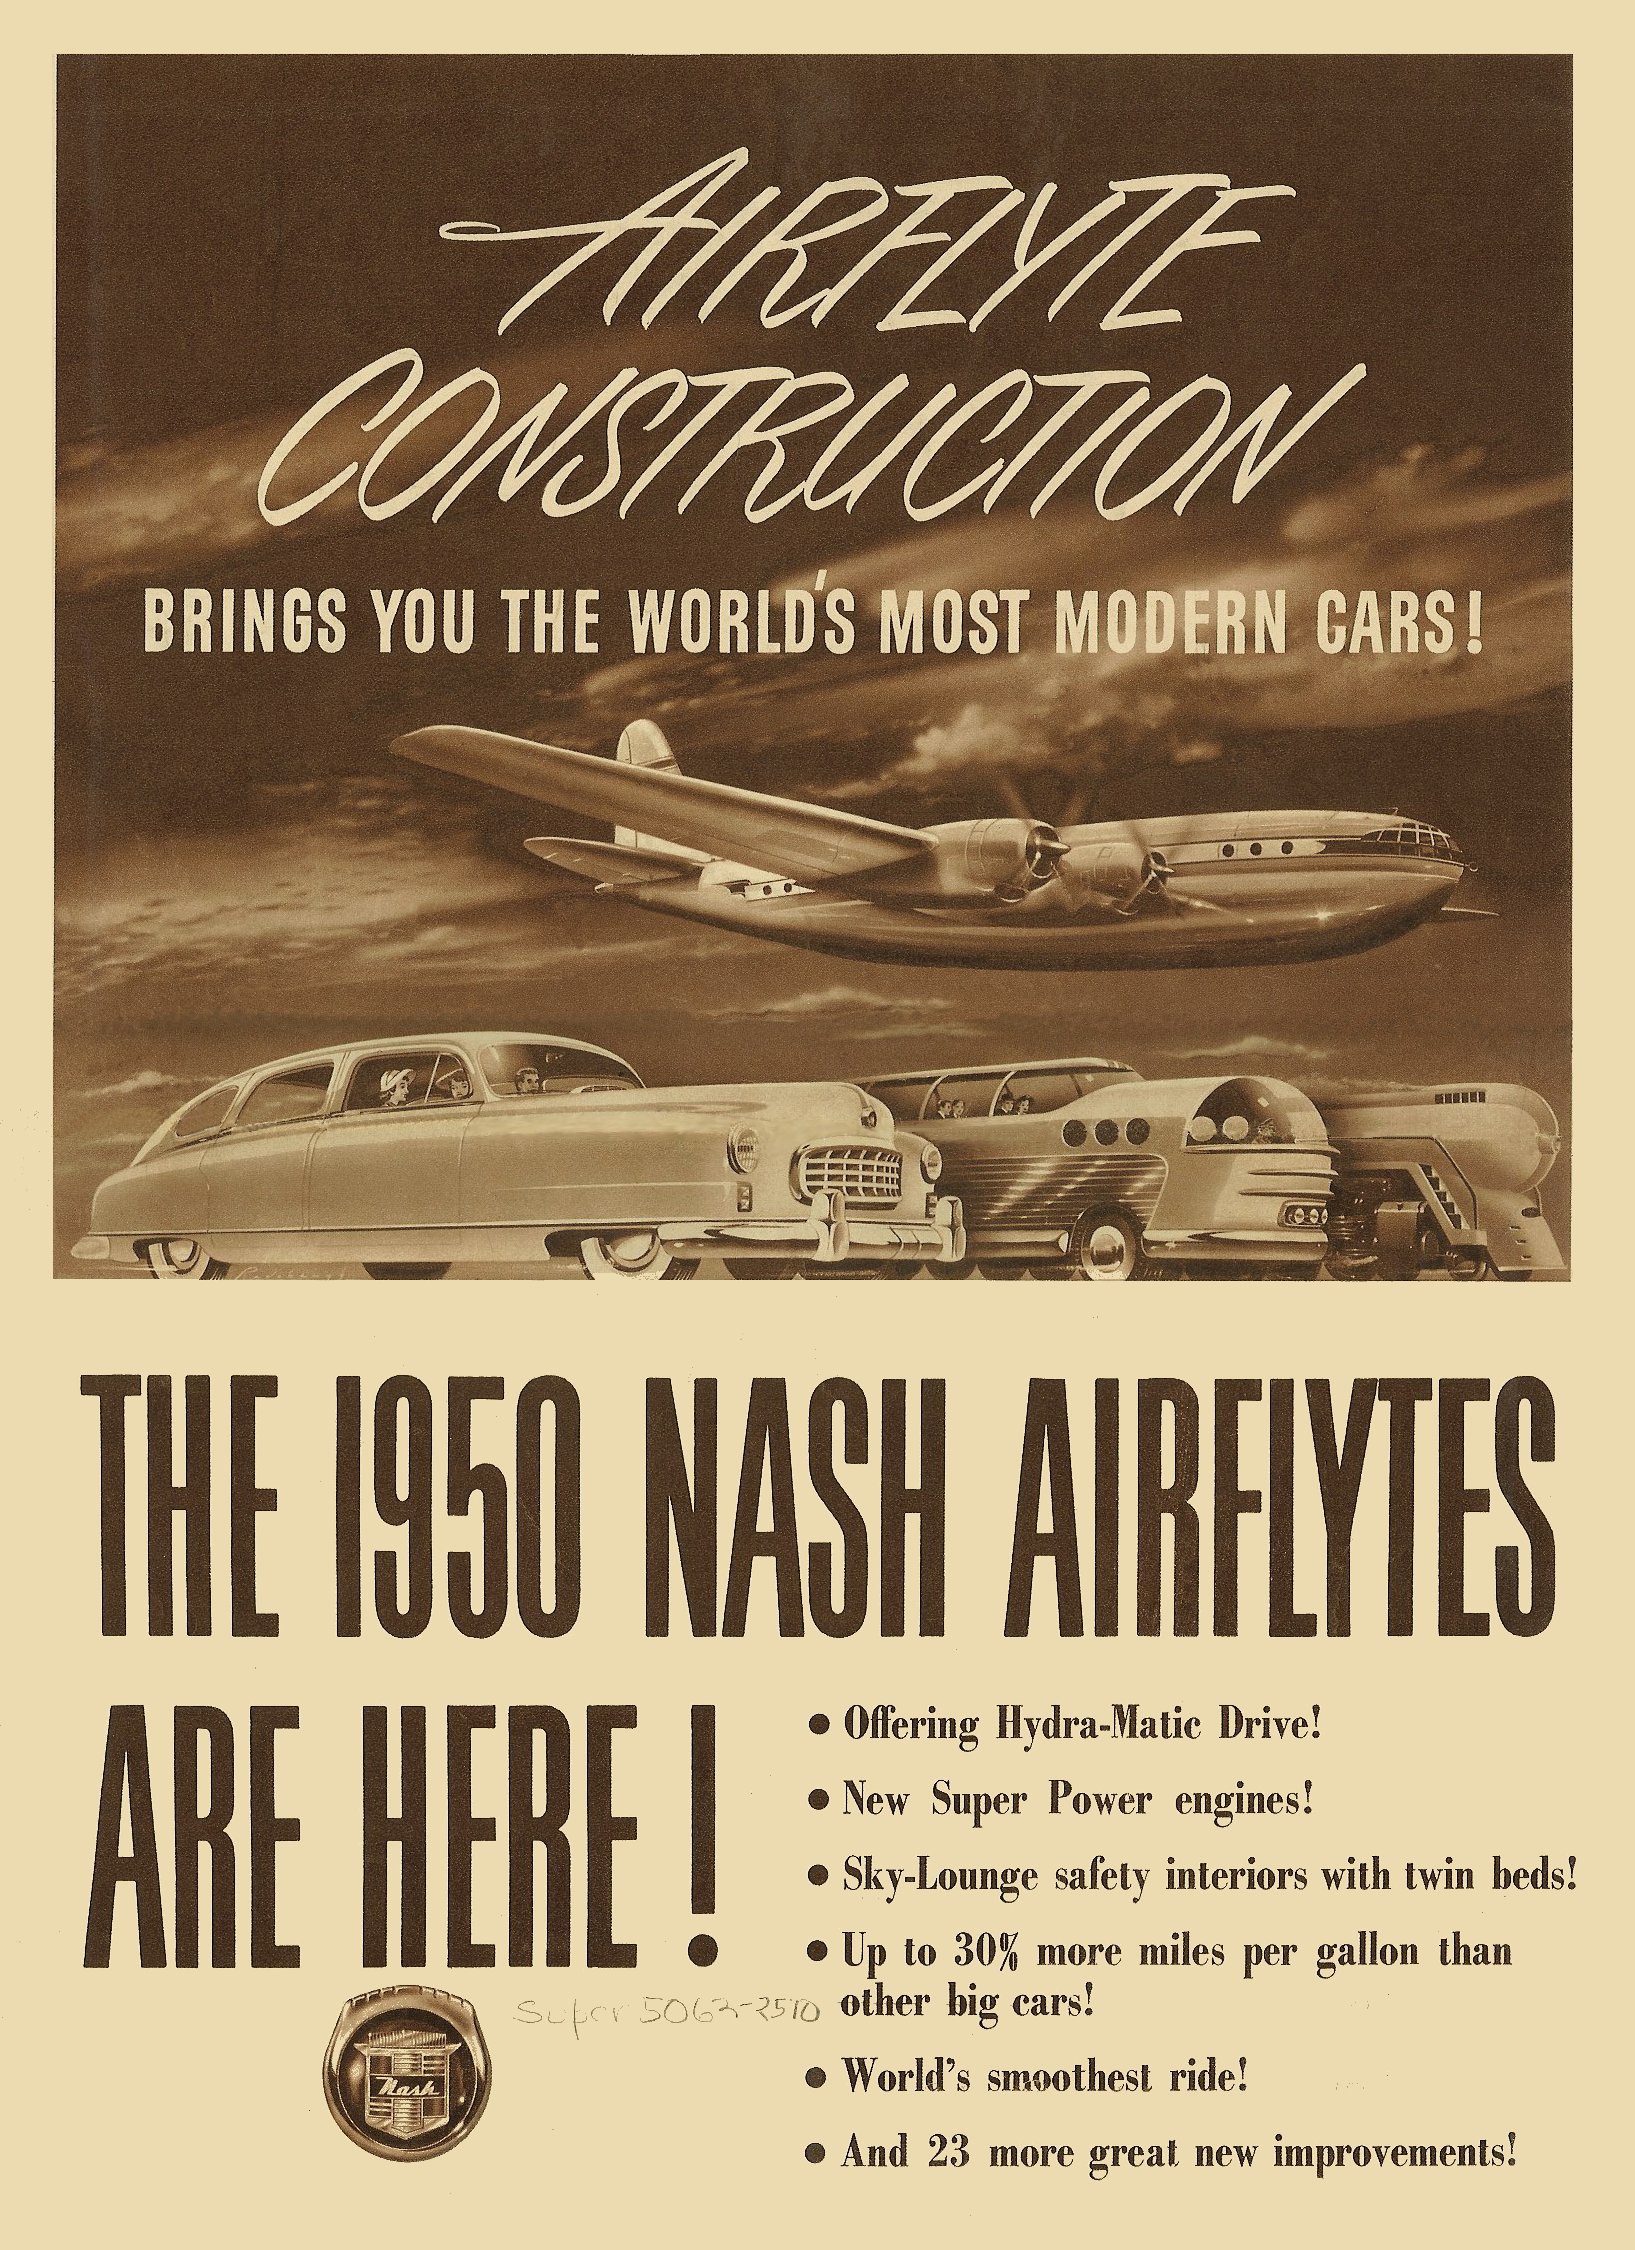 1950 Nash Airflyte Foldout